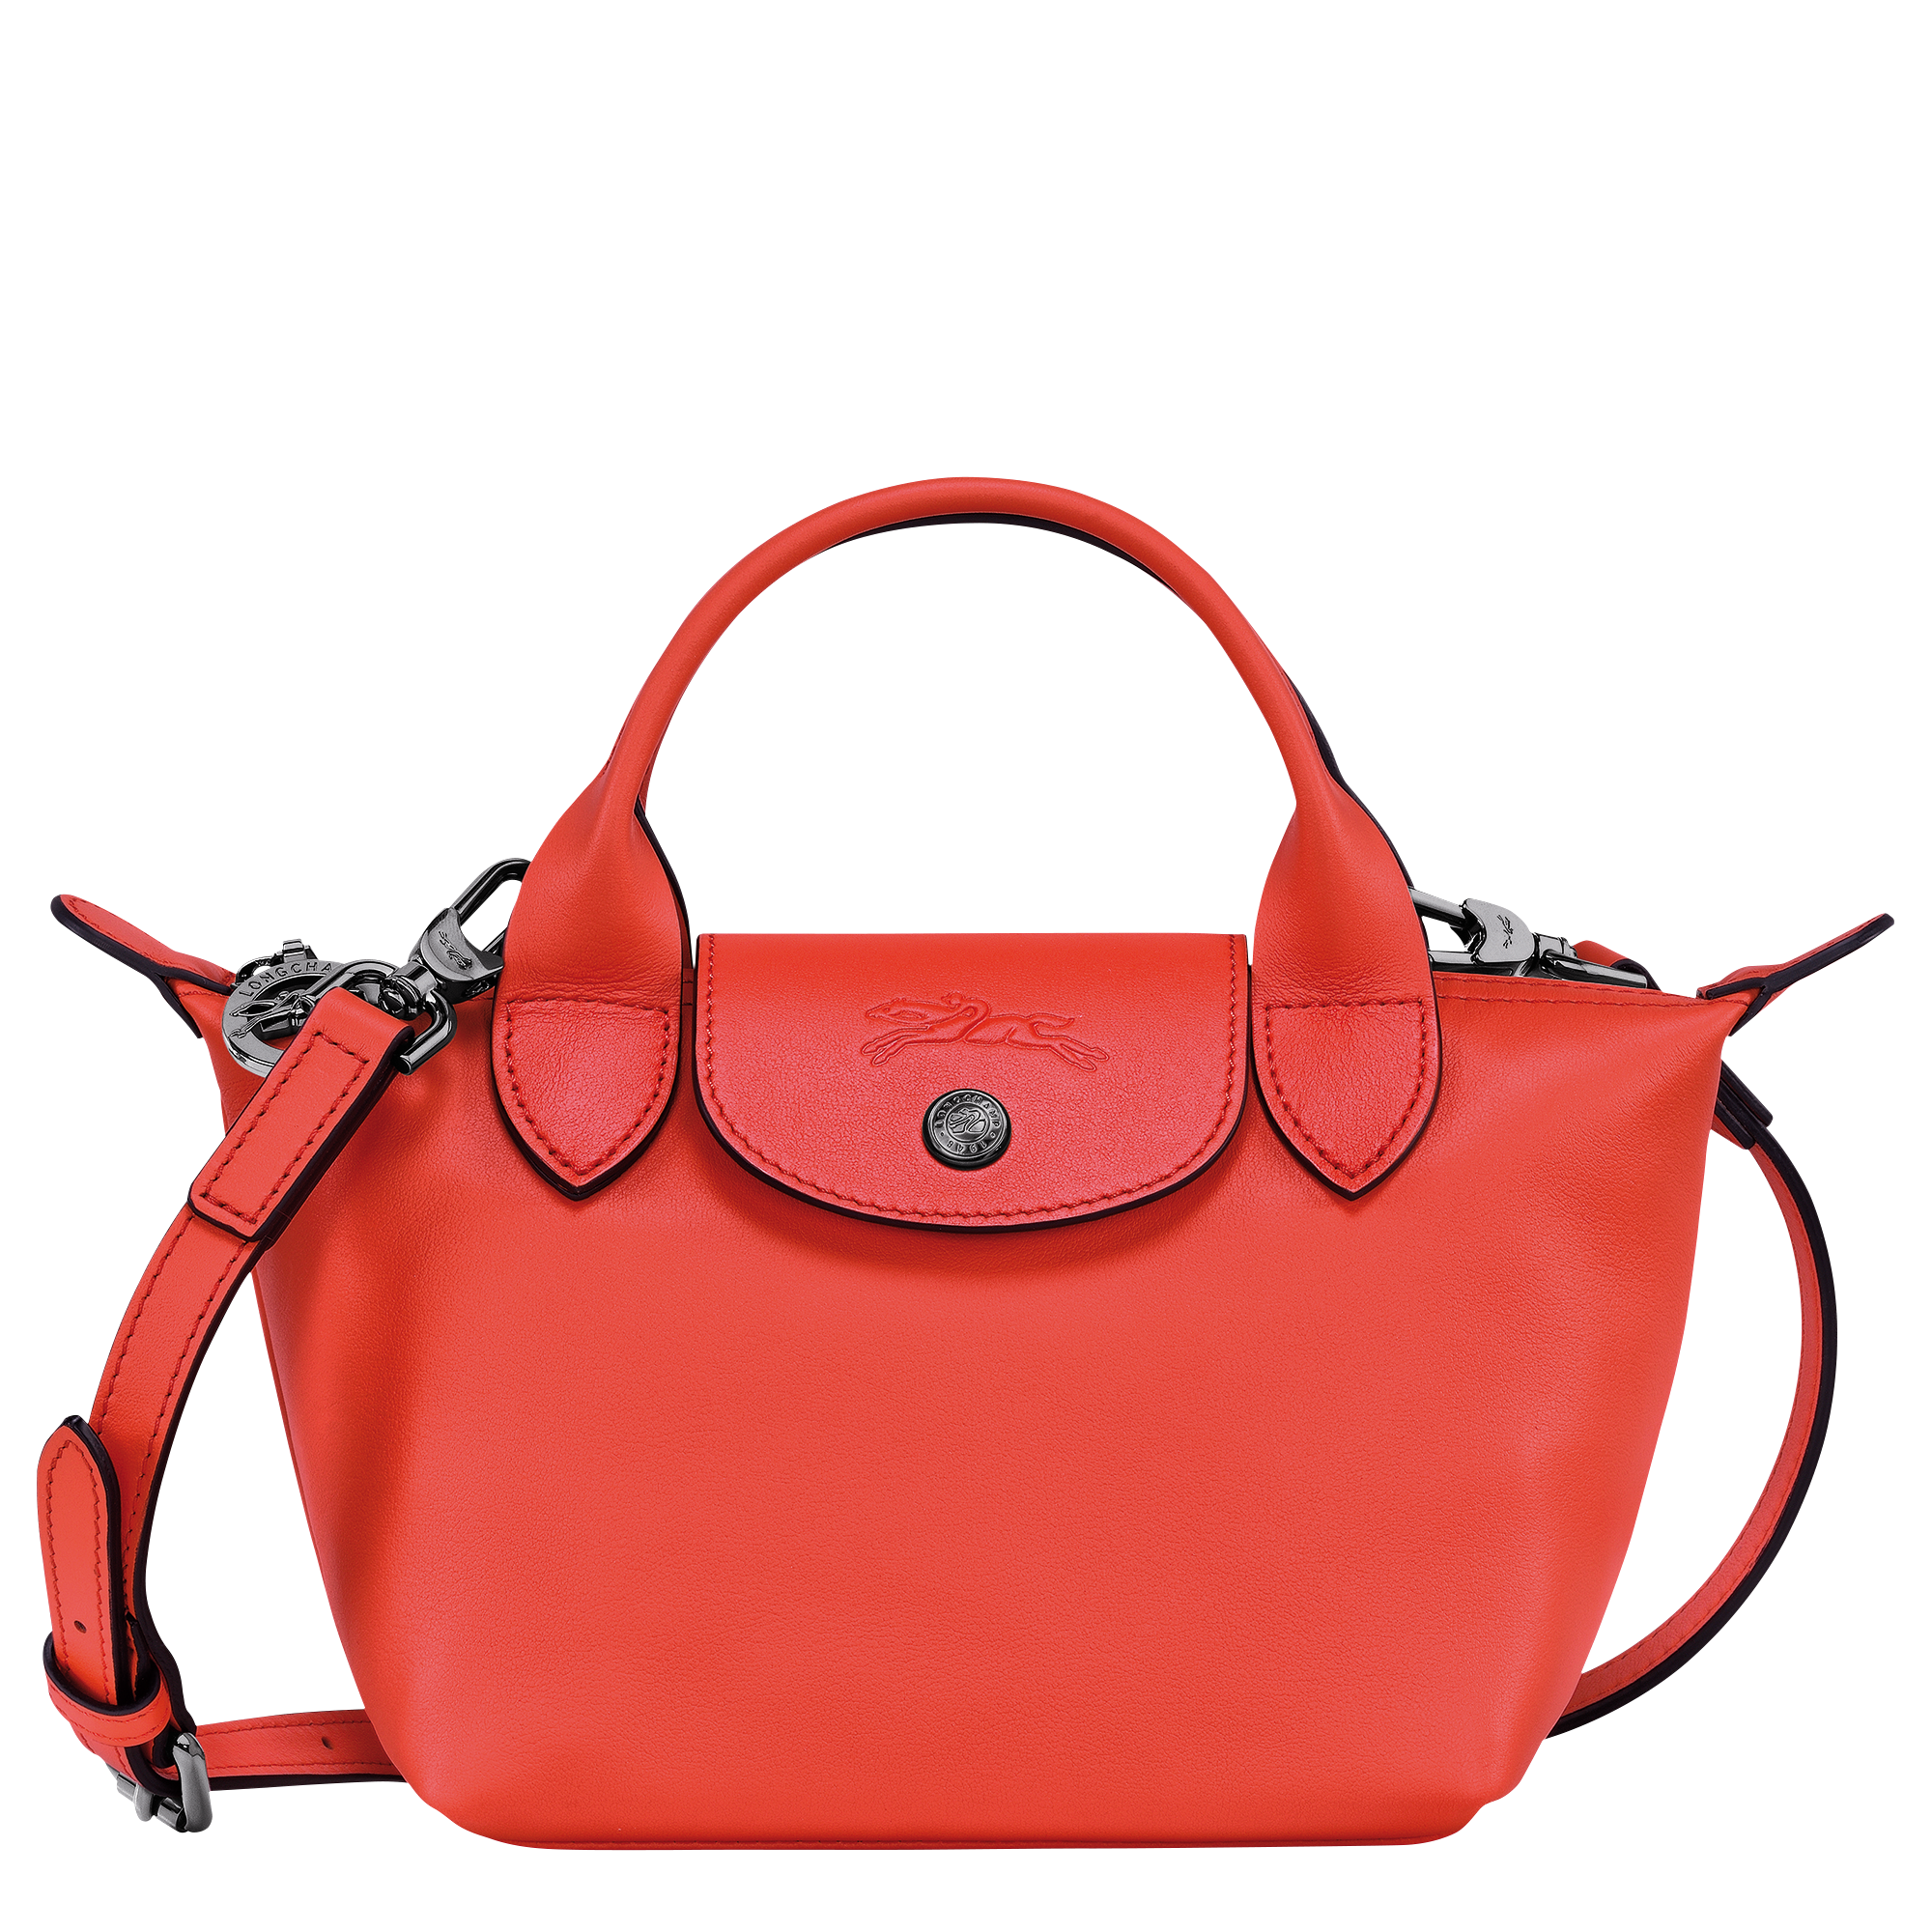 Le pliage cuir <3  Bags, Longchamp bag, Longchamp handbags